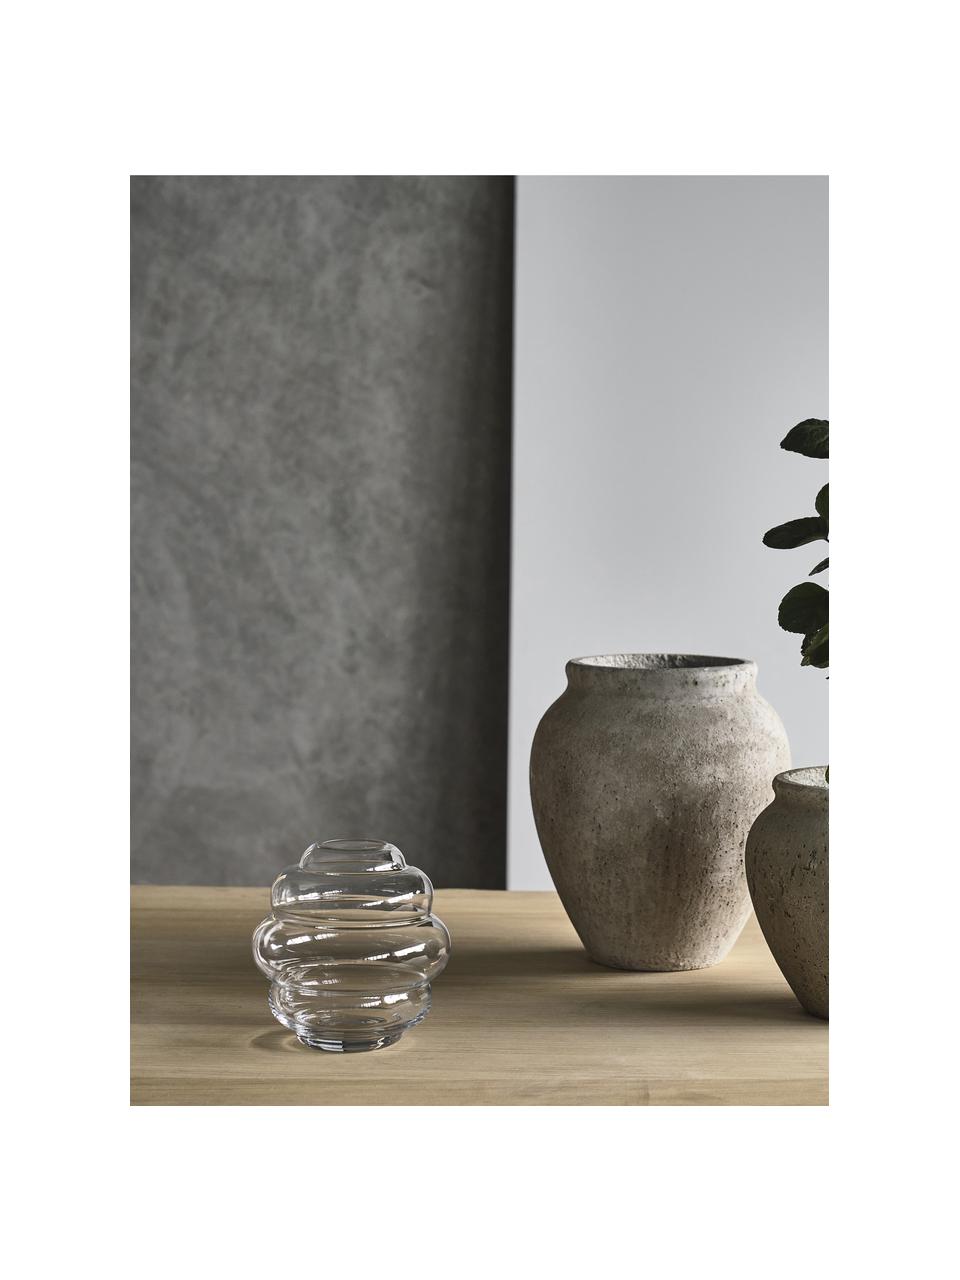 Vaso in vetro Bubble, Alt. 21 cm, Vetro, Trasparente, Ø 20 x Alt. 21 cm